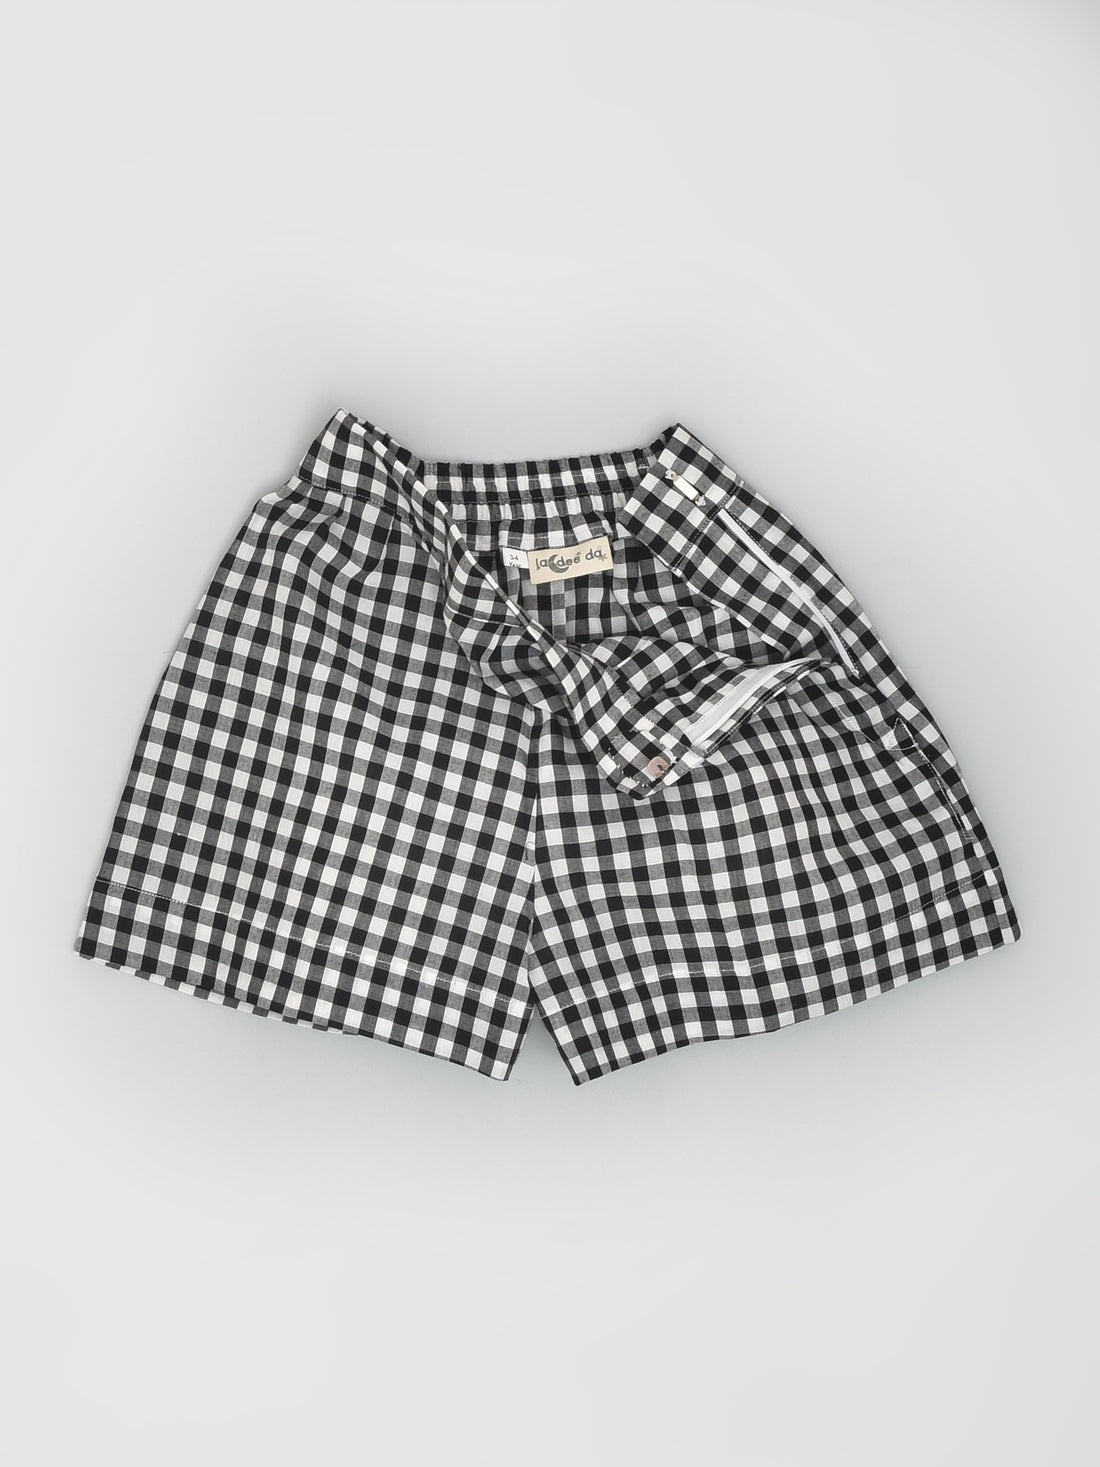 Black & White Check Shorts for Girls